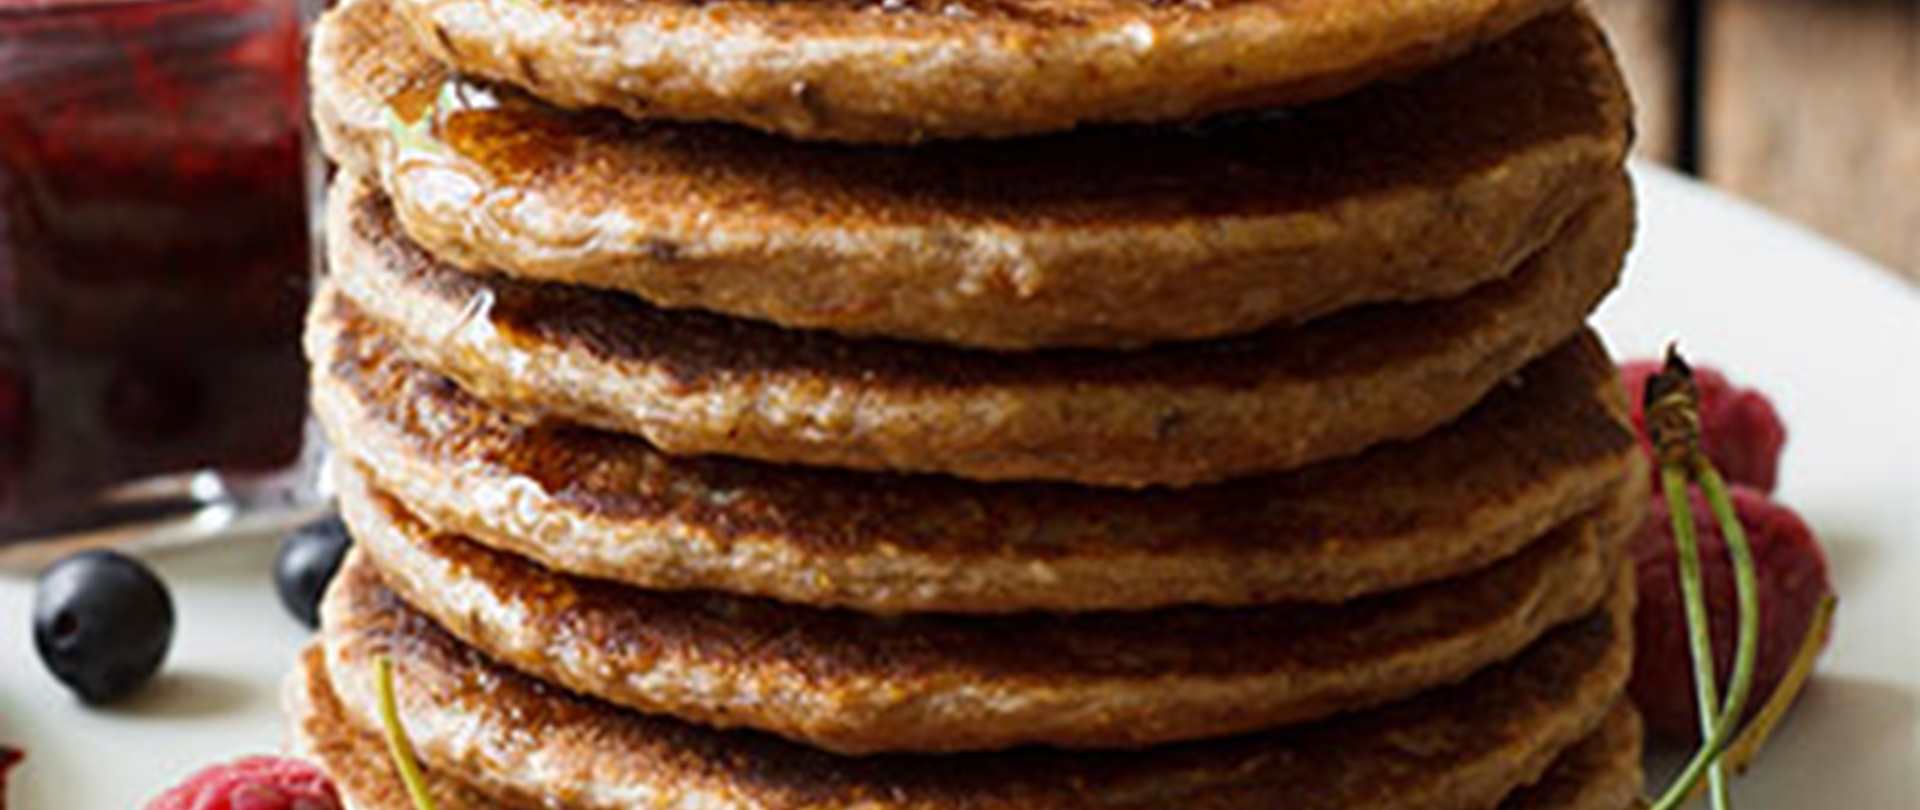 A pile of American breakfast pancakes